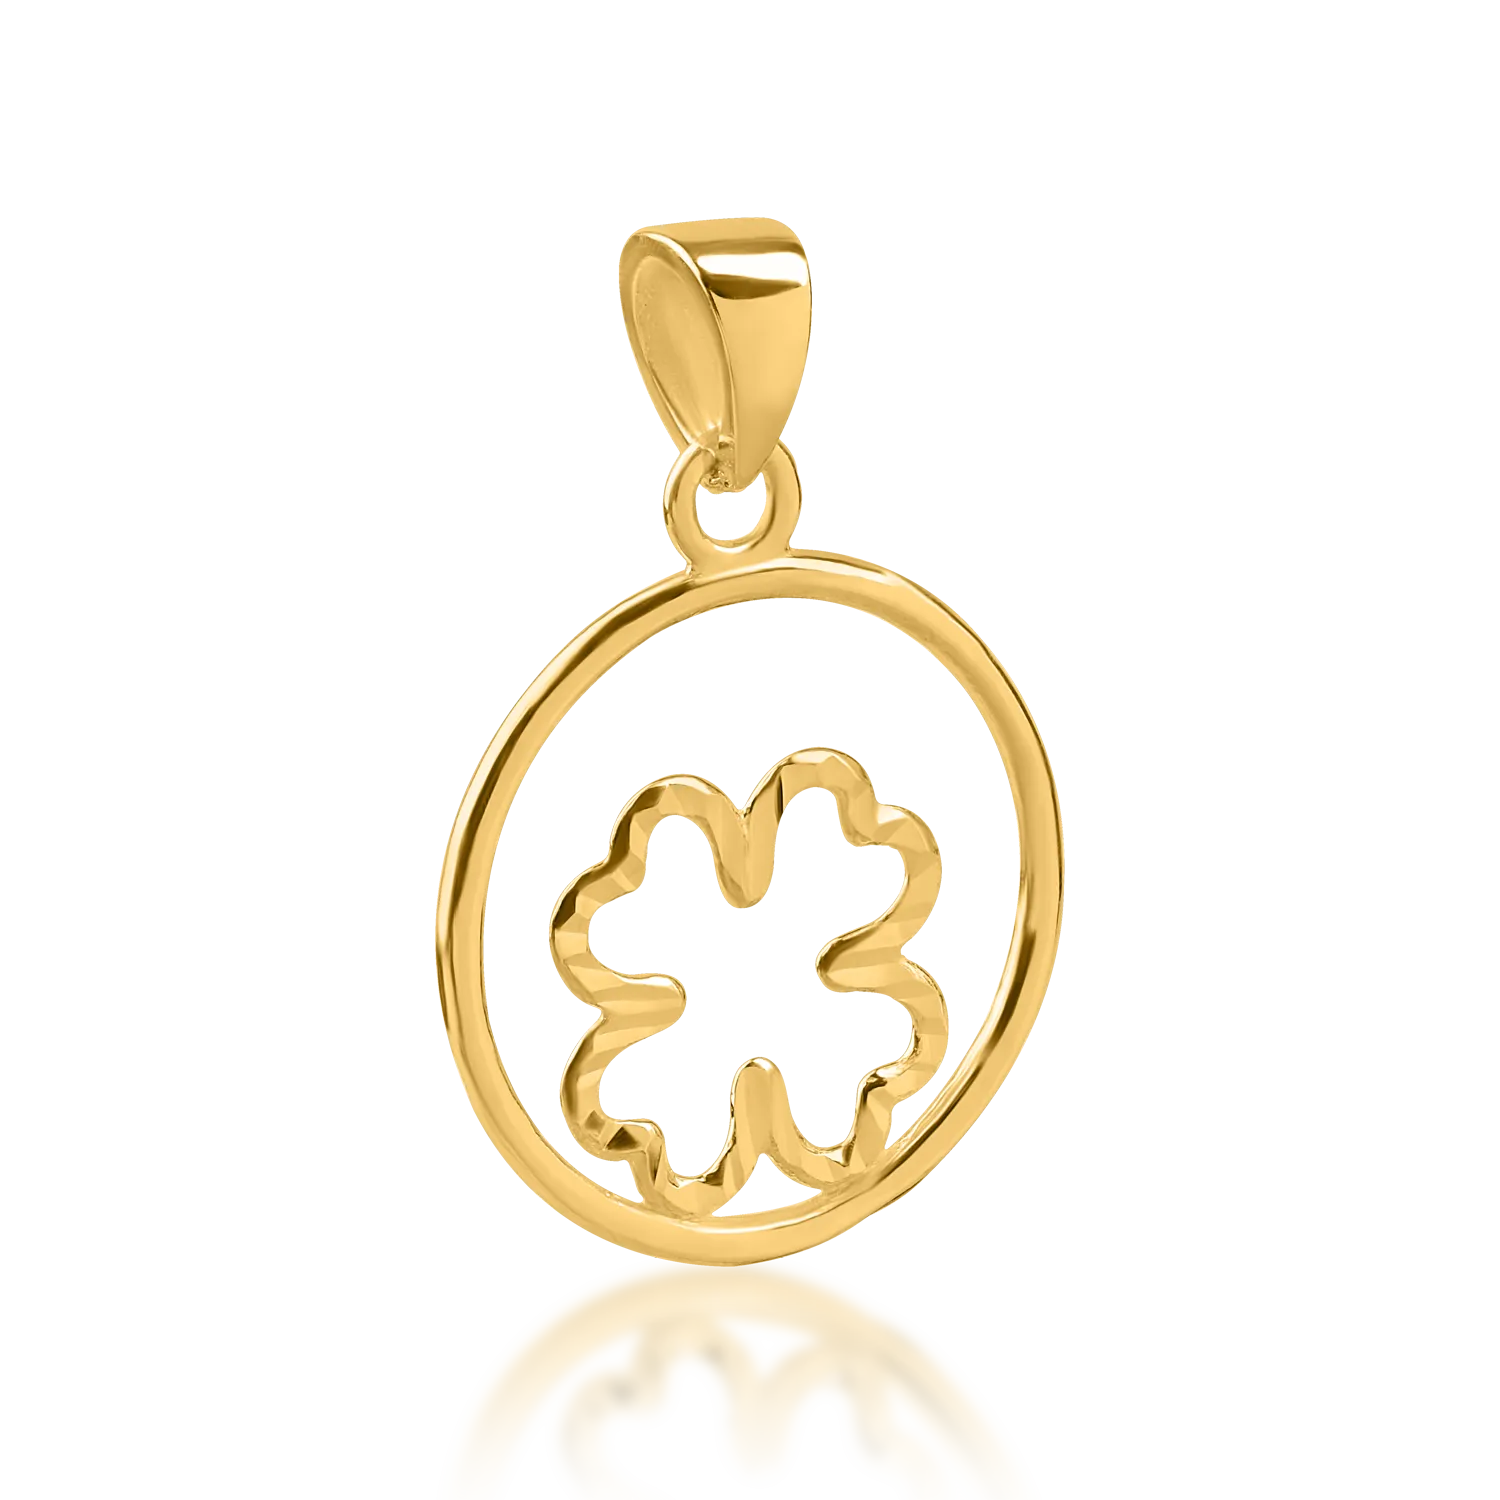 Yellow gold round clover pendant